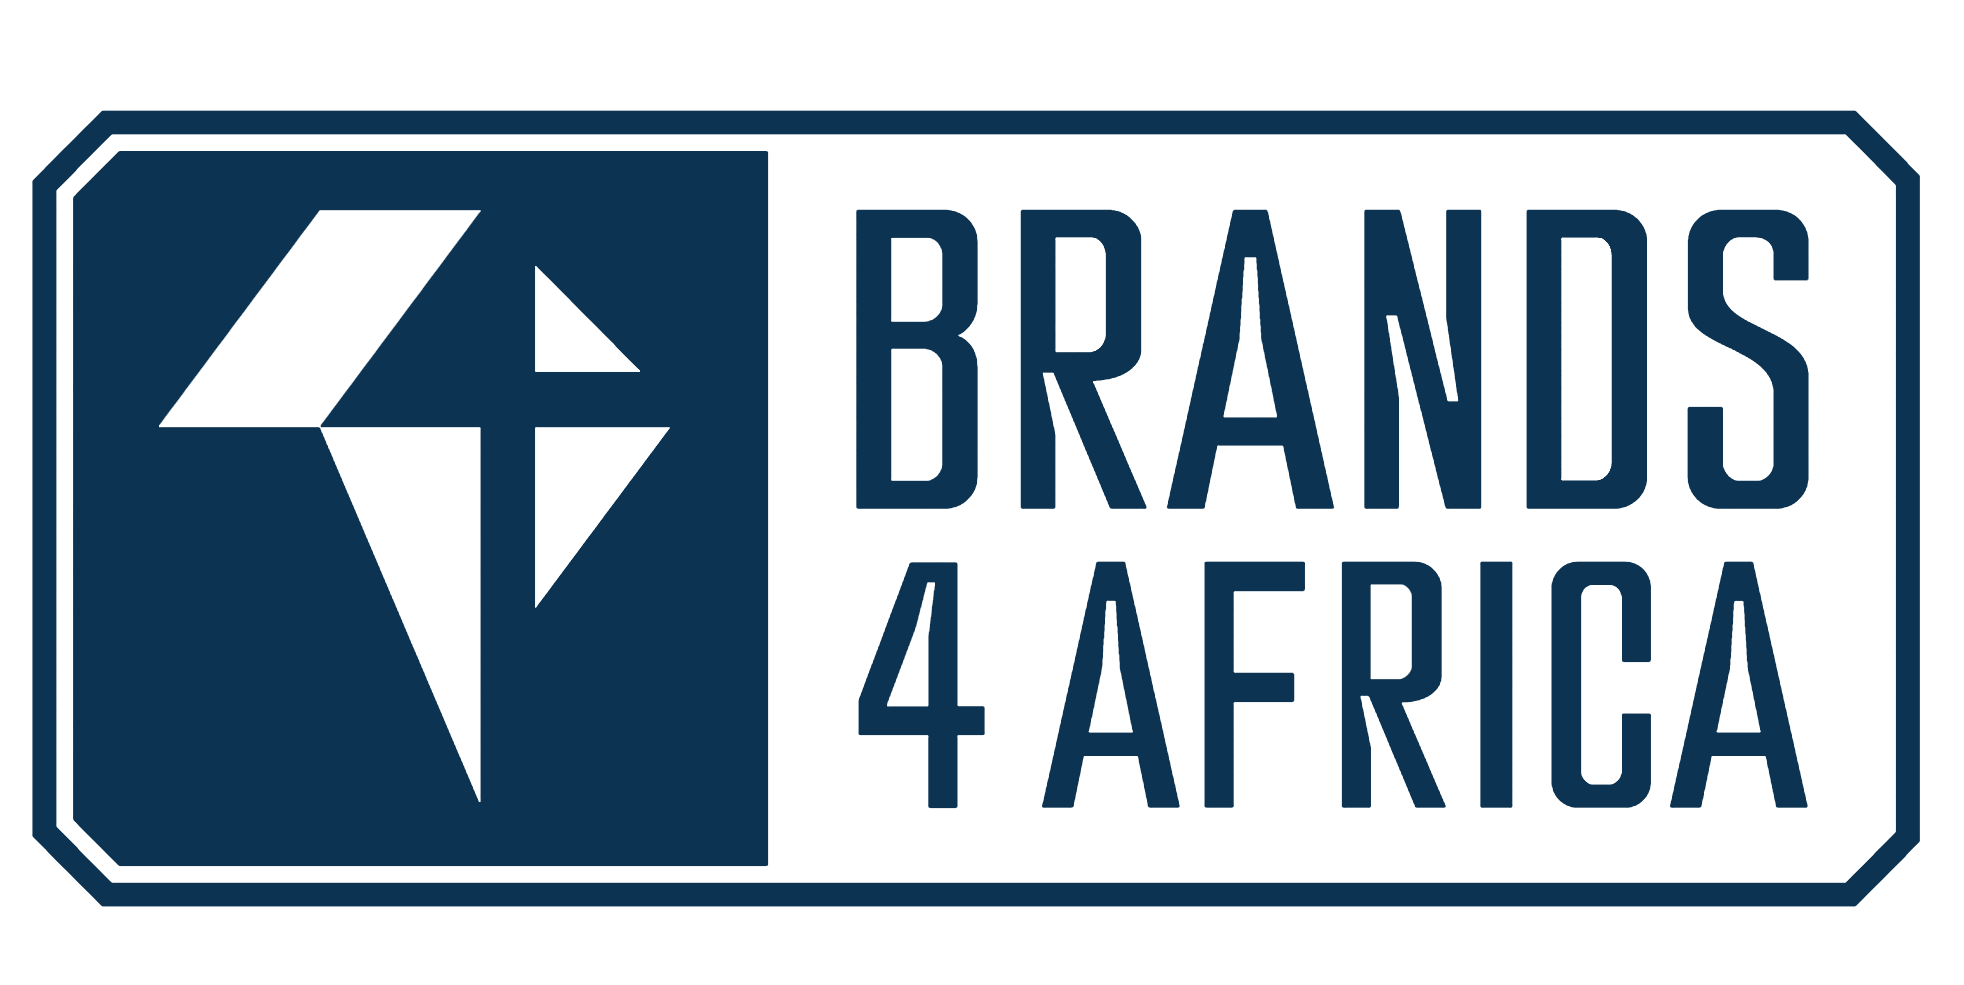 Brands 4 Africa